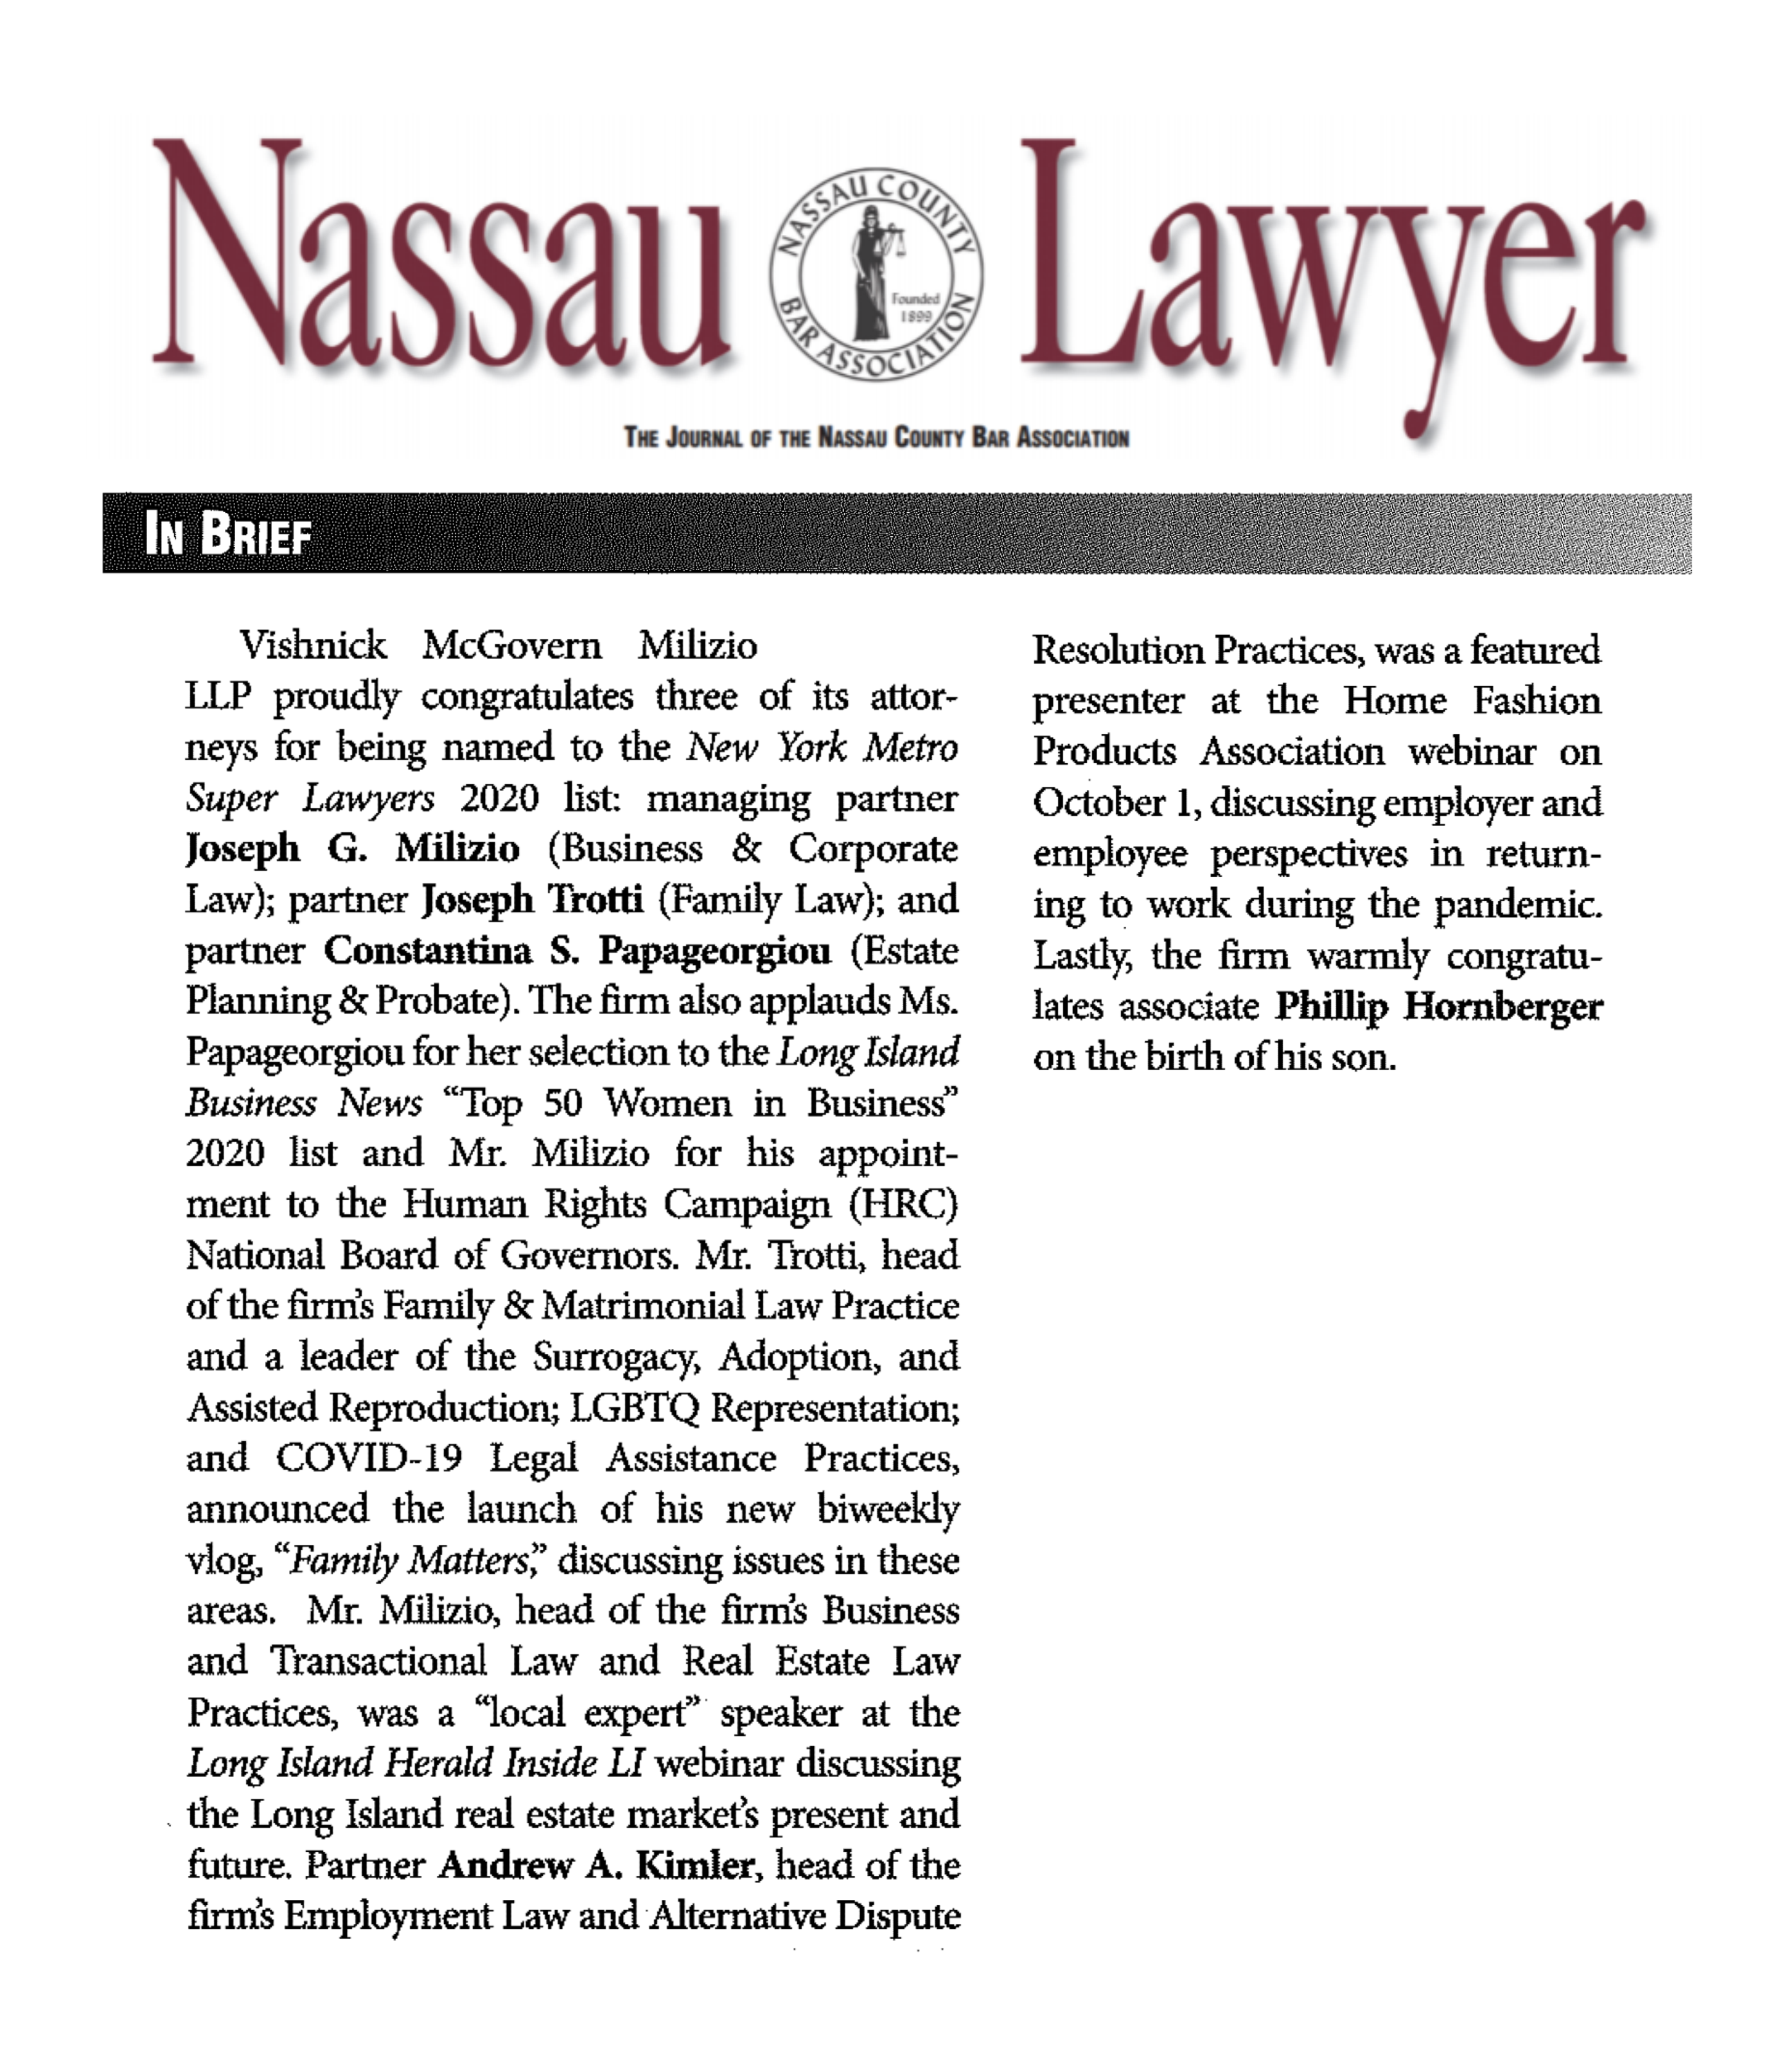 Nassau Lawyer Article